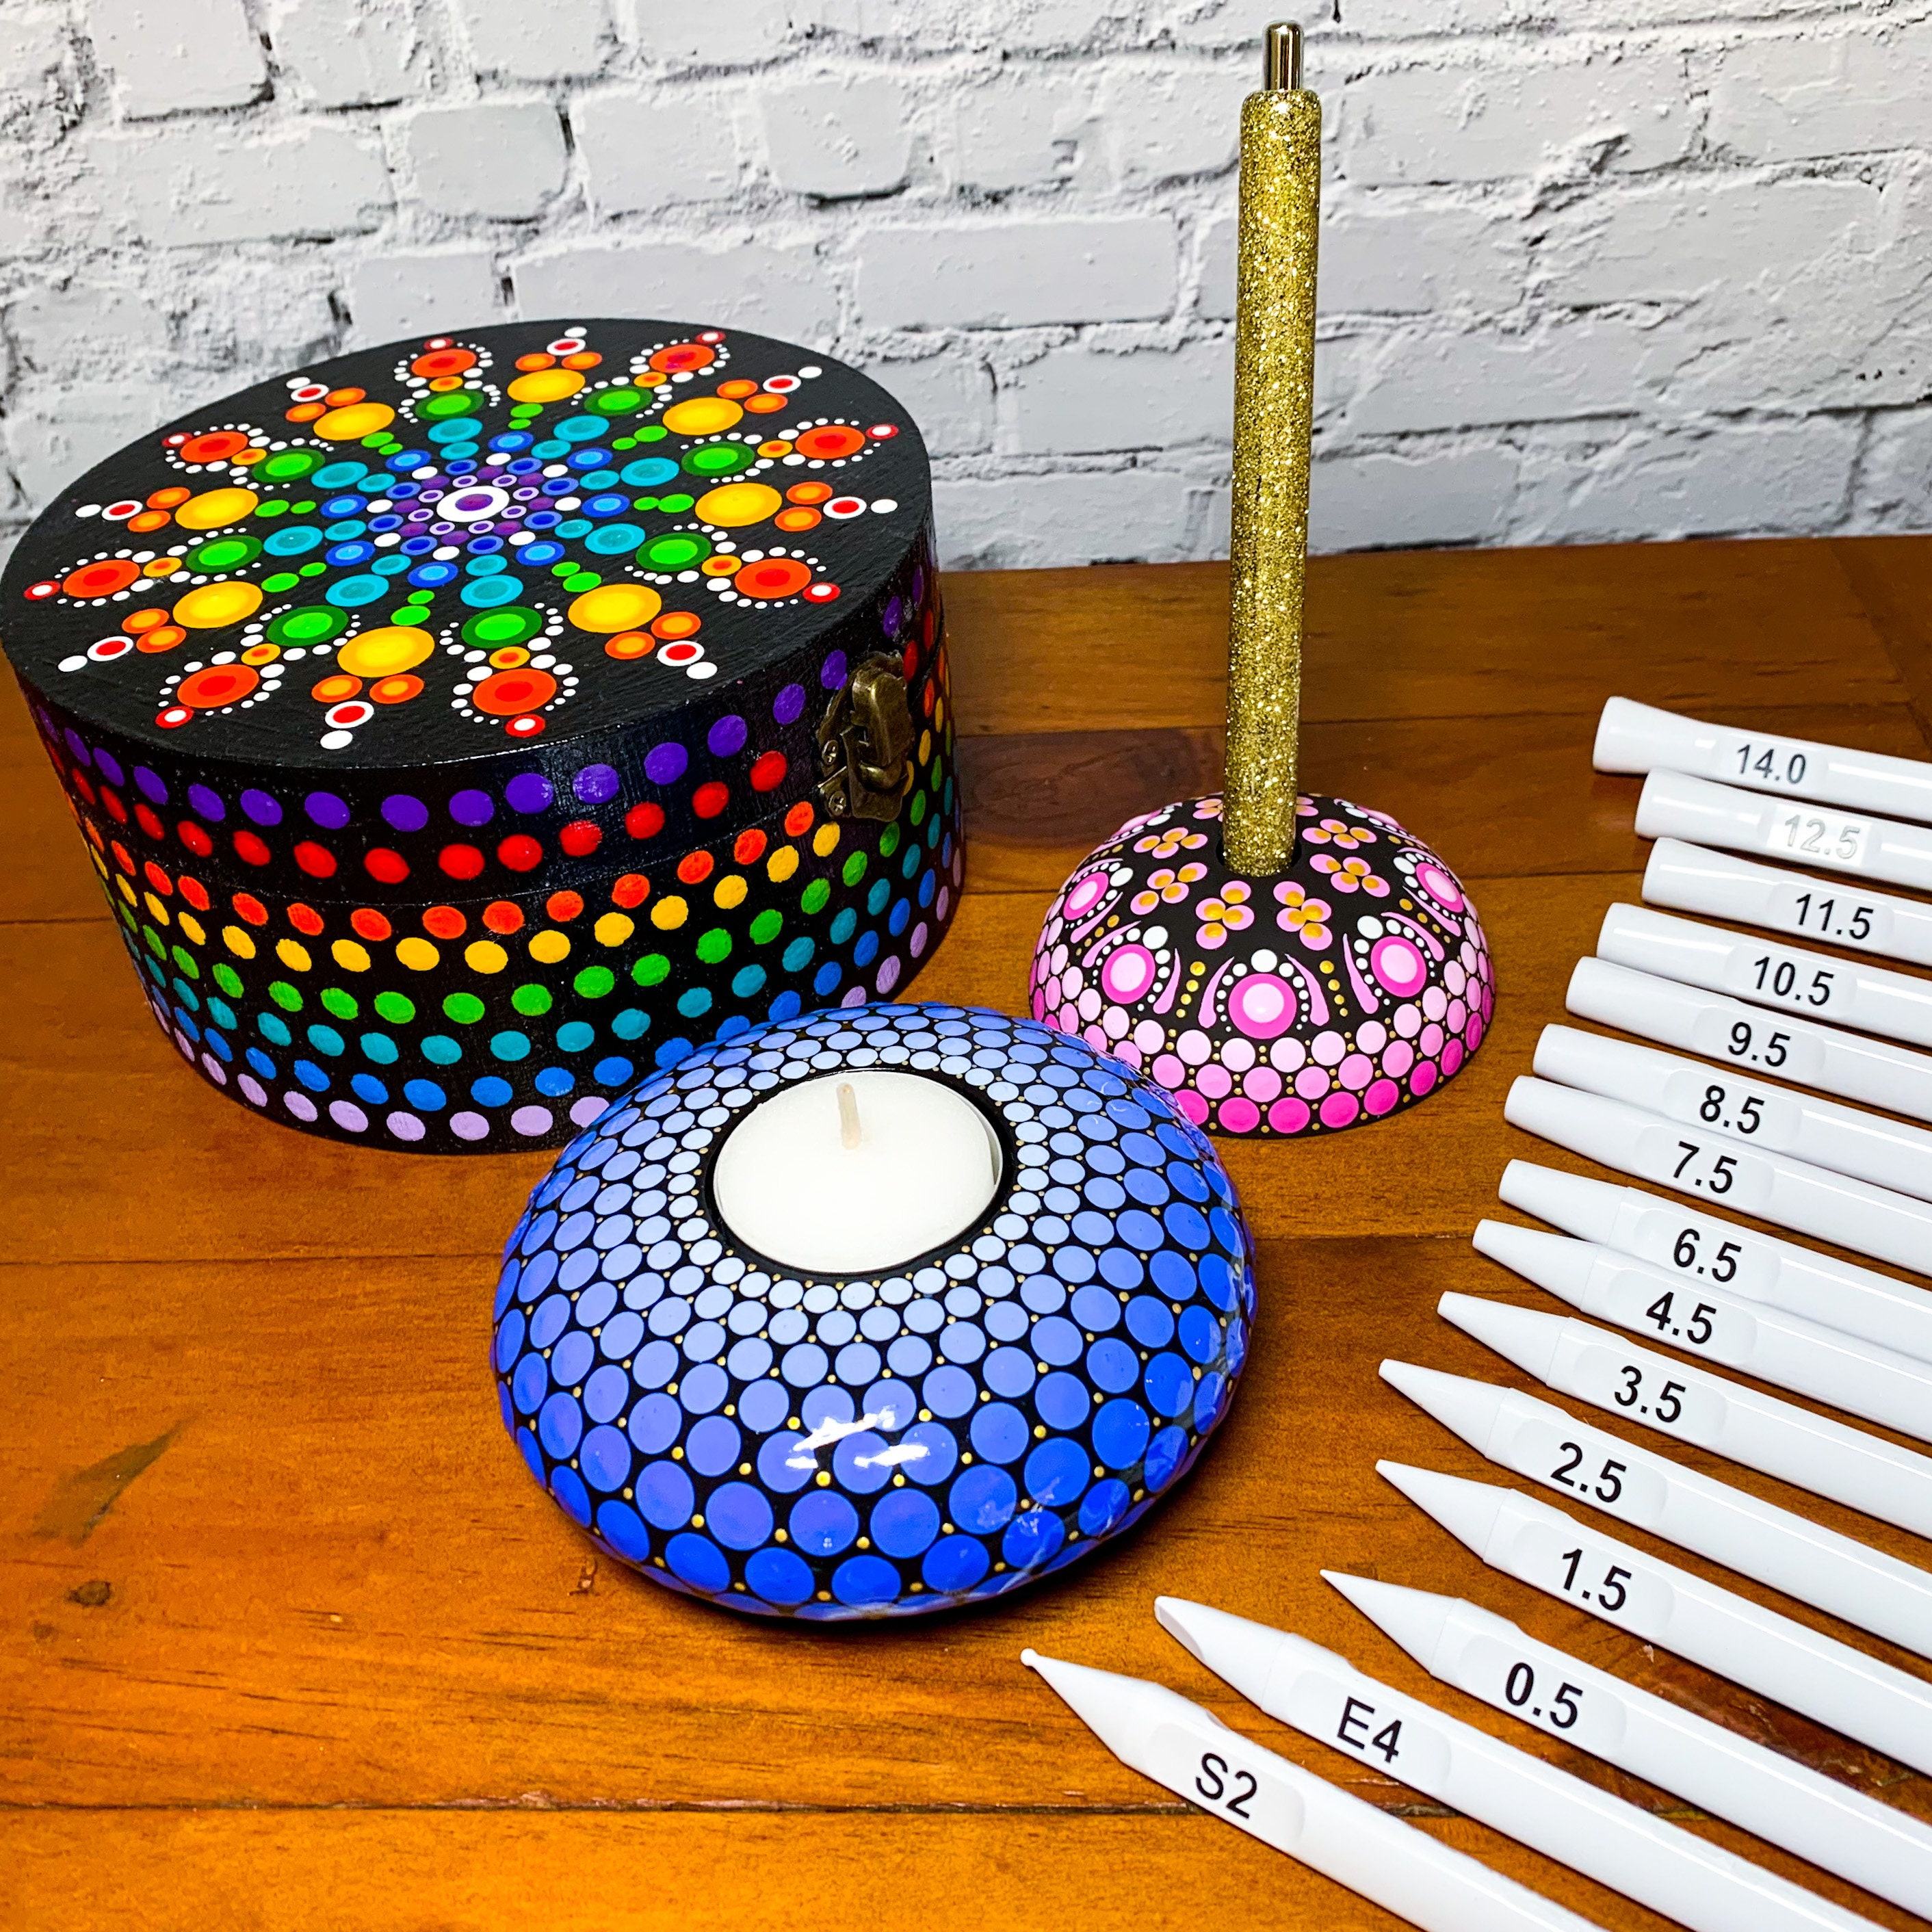 16pc Dotting Tools Set for Mandala Art - Includes Guinea